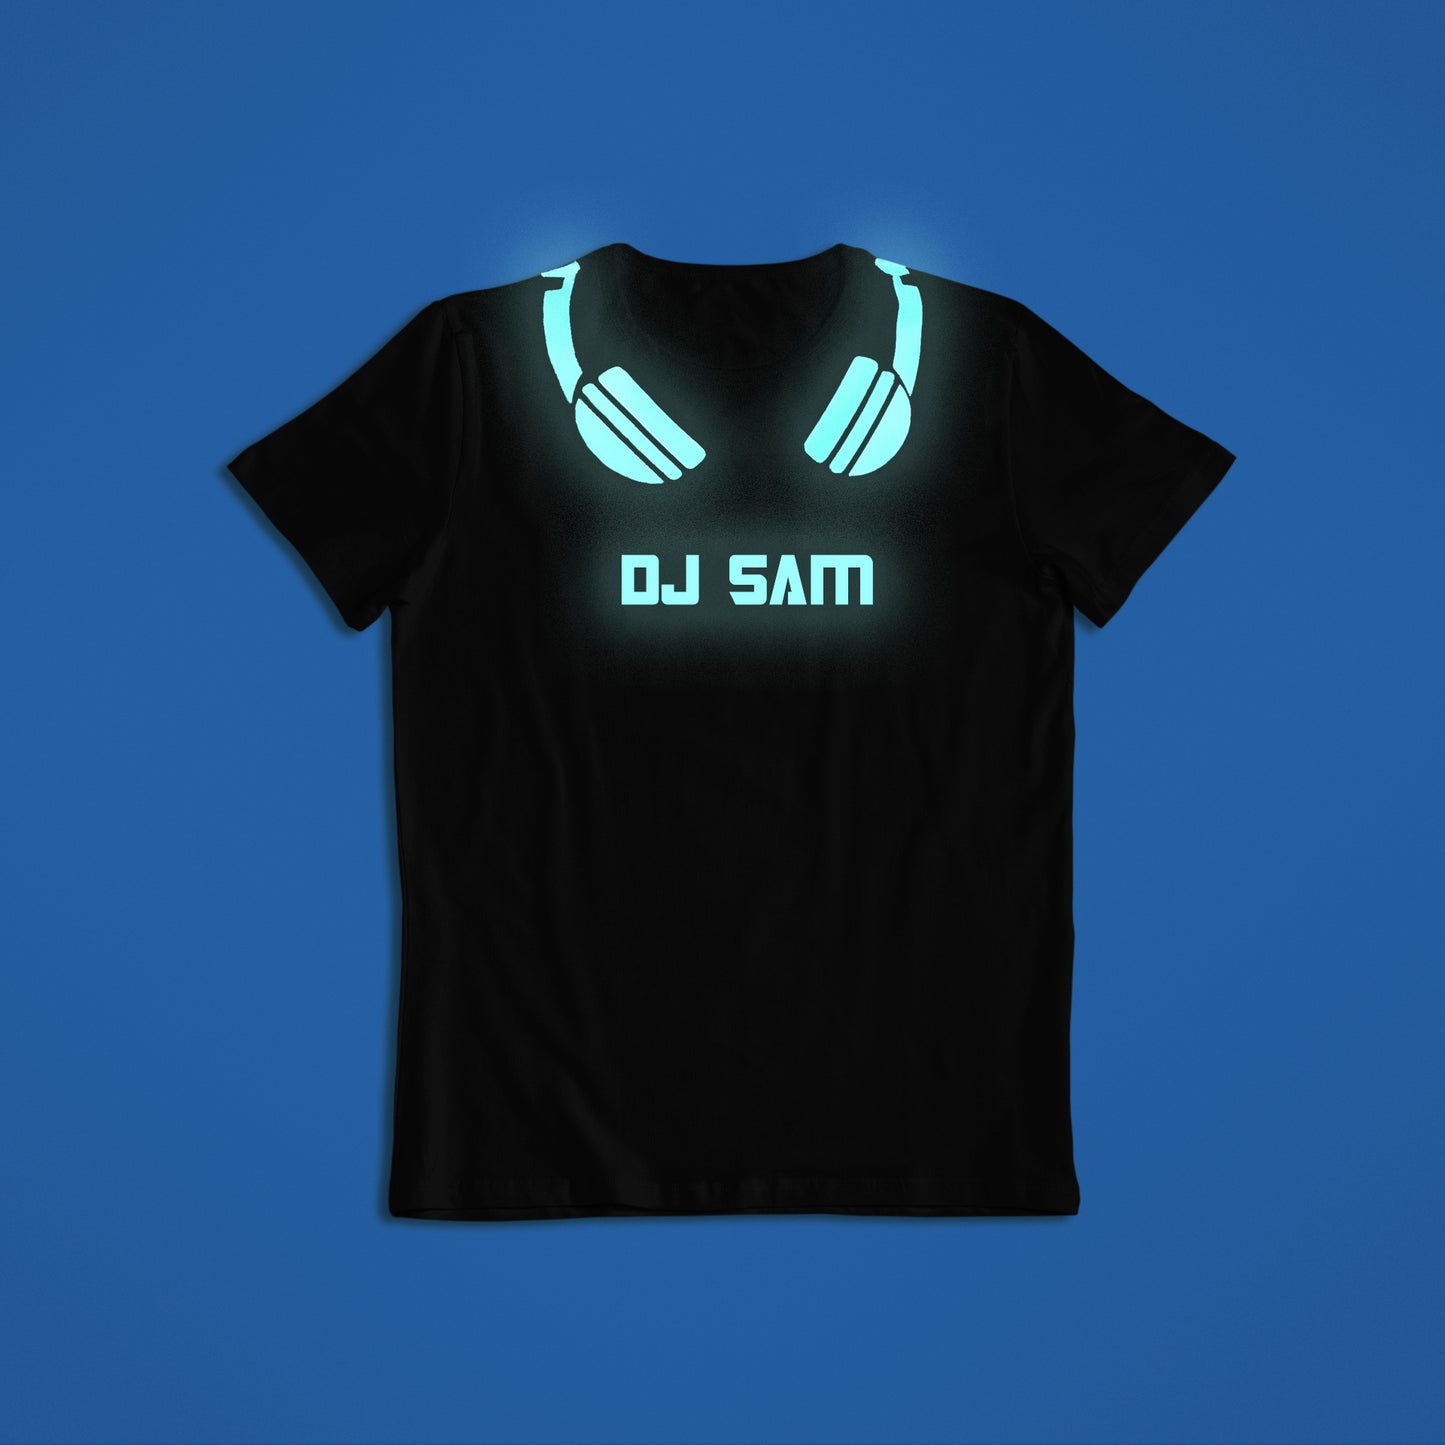 DJ t-shirt glowing in the dark